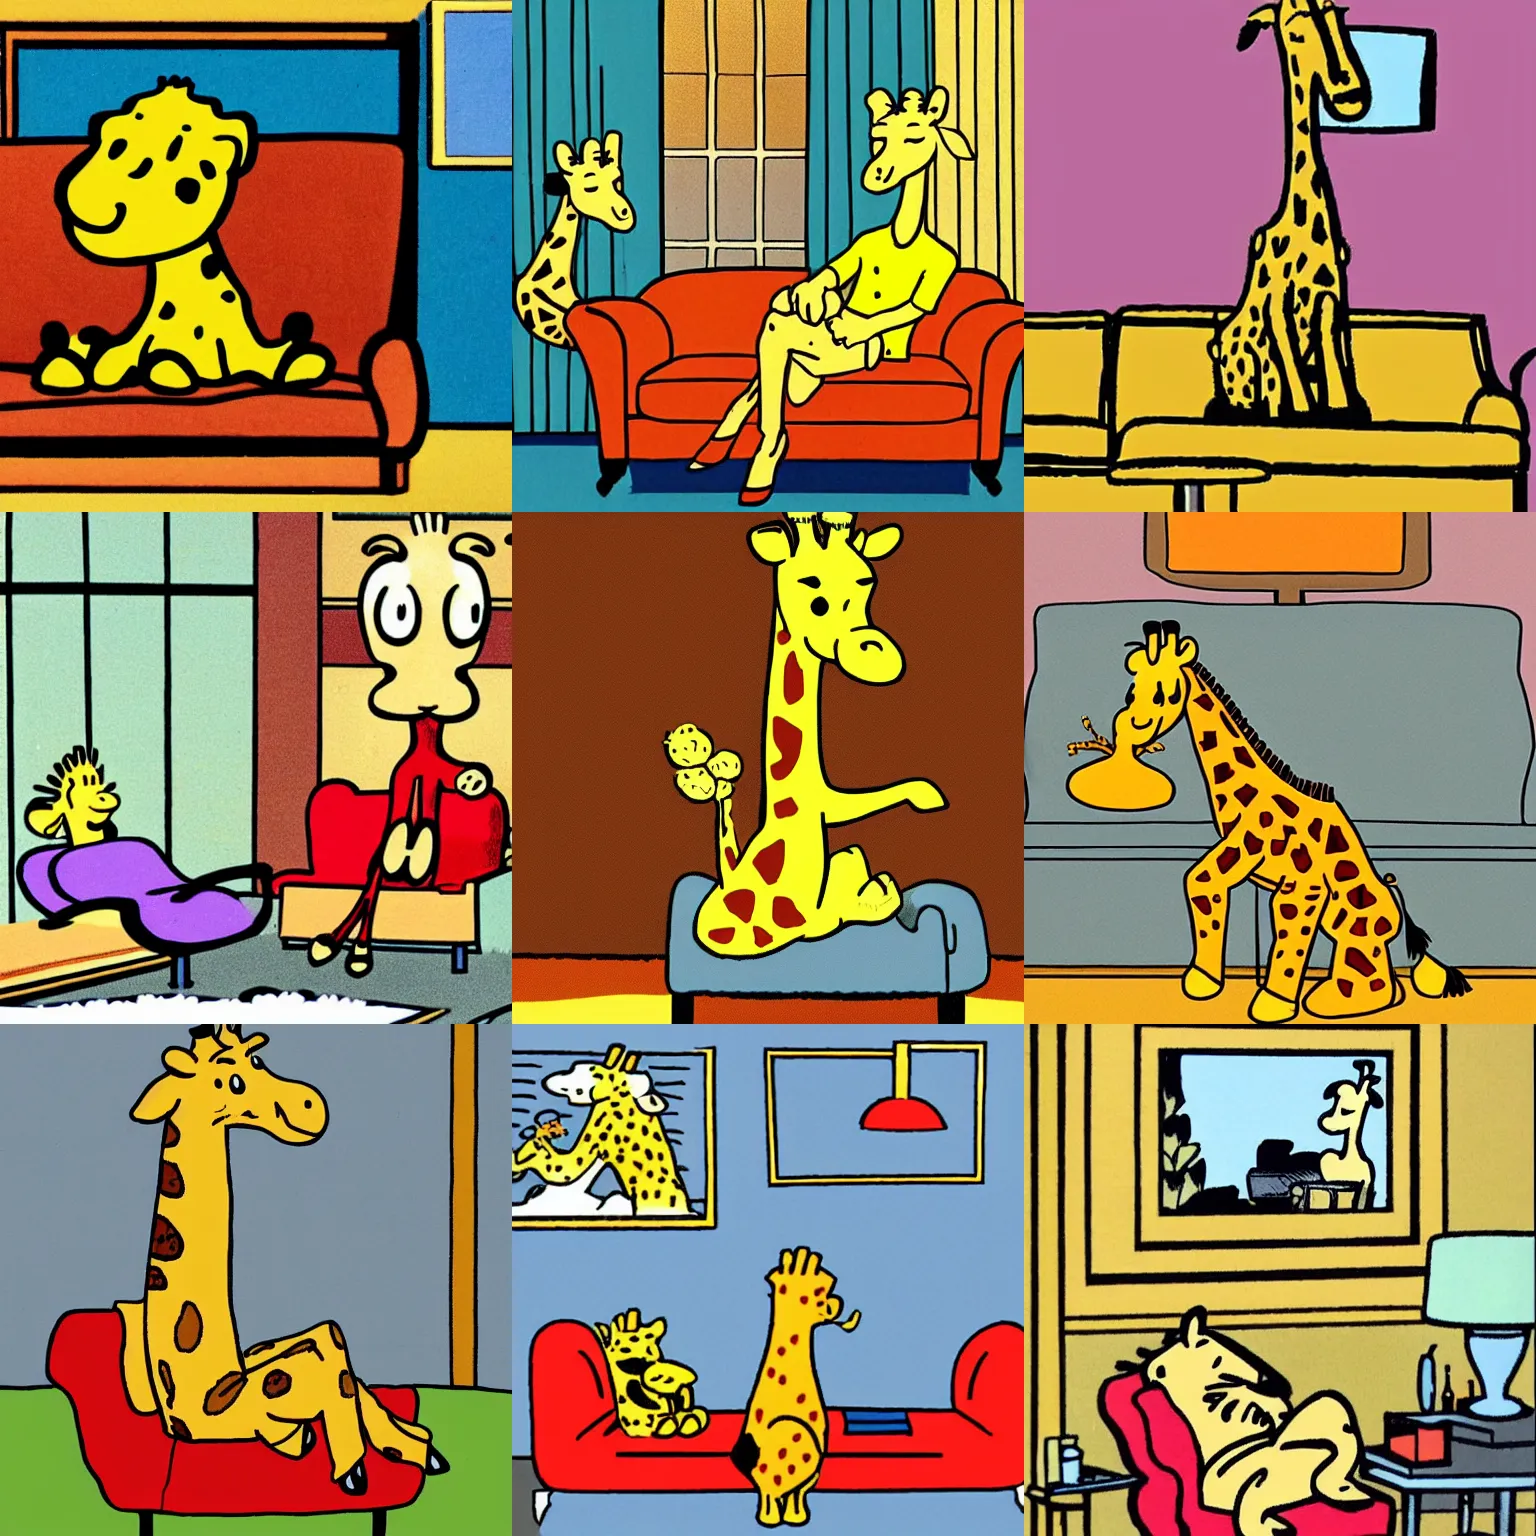 Prompt: a cute cartoon giraffe sitting on a sofa watching TV, Hergé